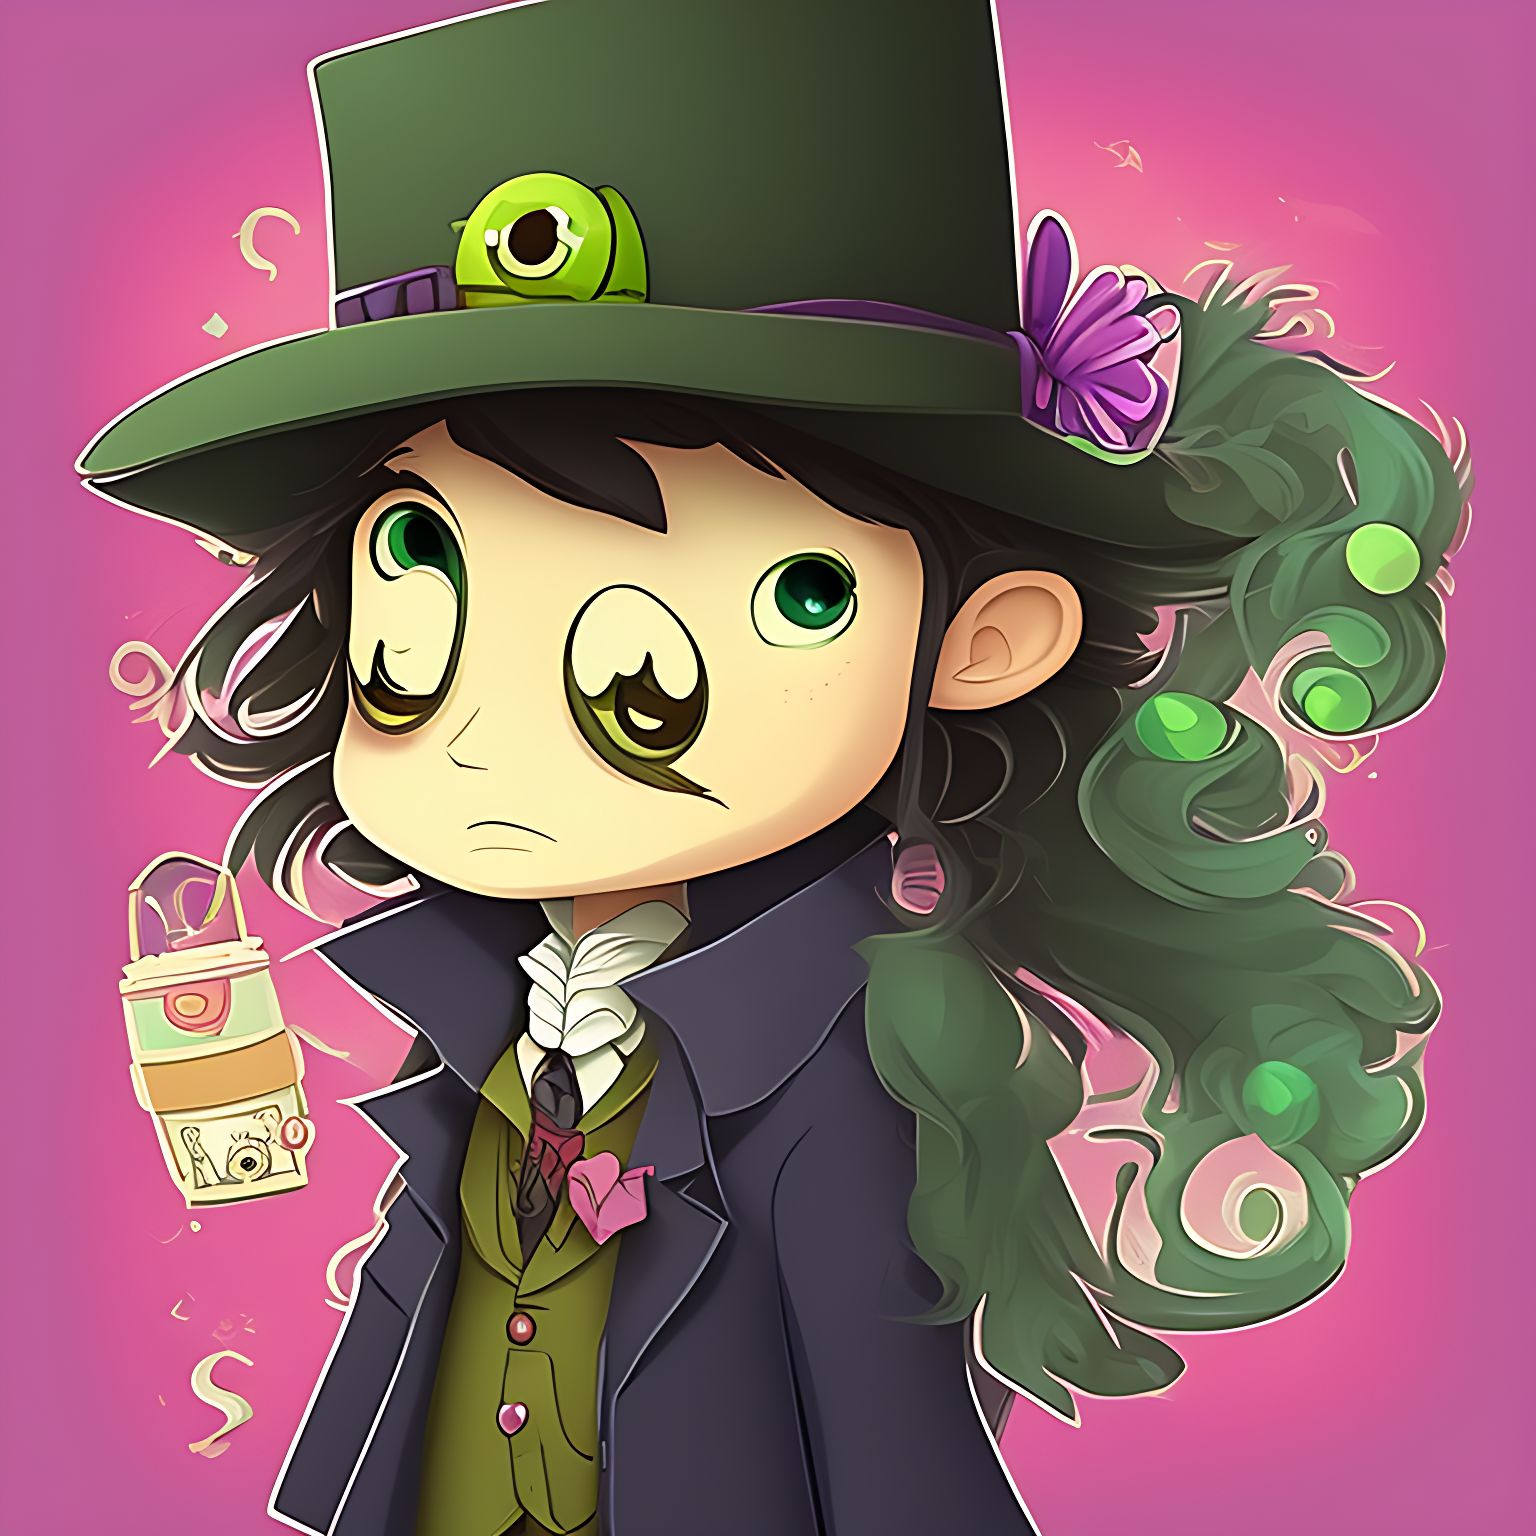 jaysonlynn: Sherlock Holmes style detective, 2d cartoon, green background